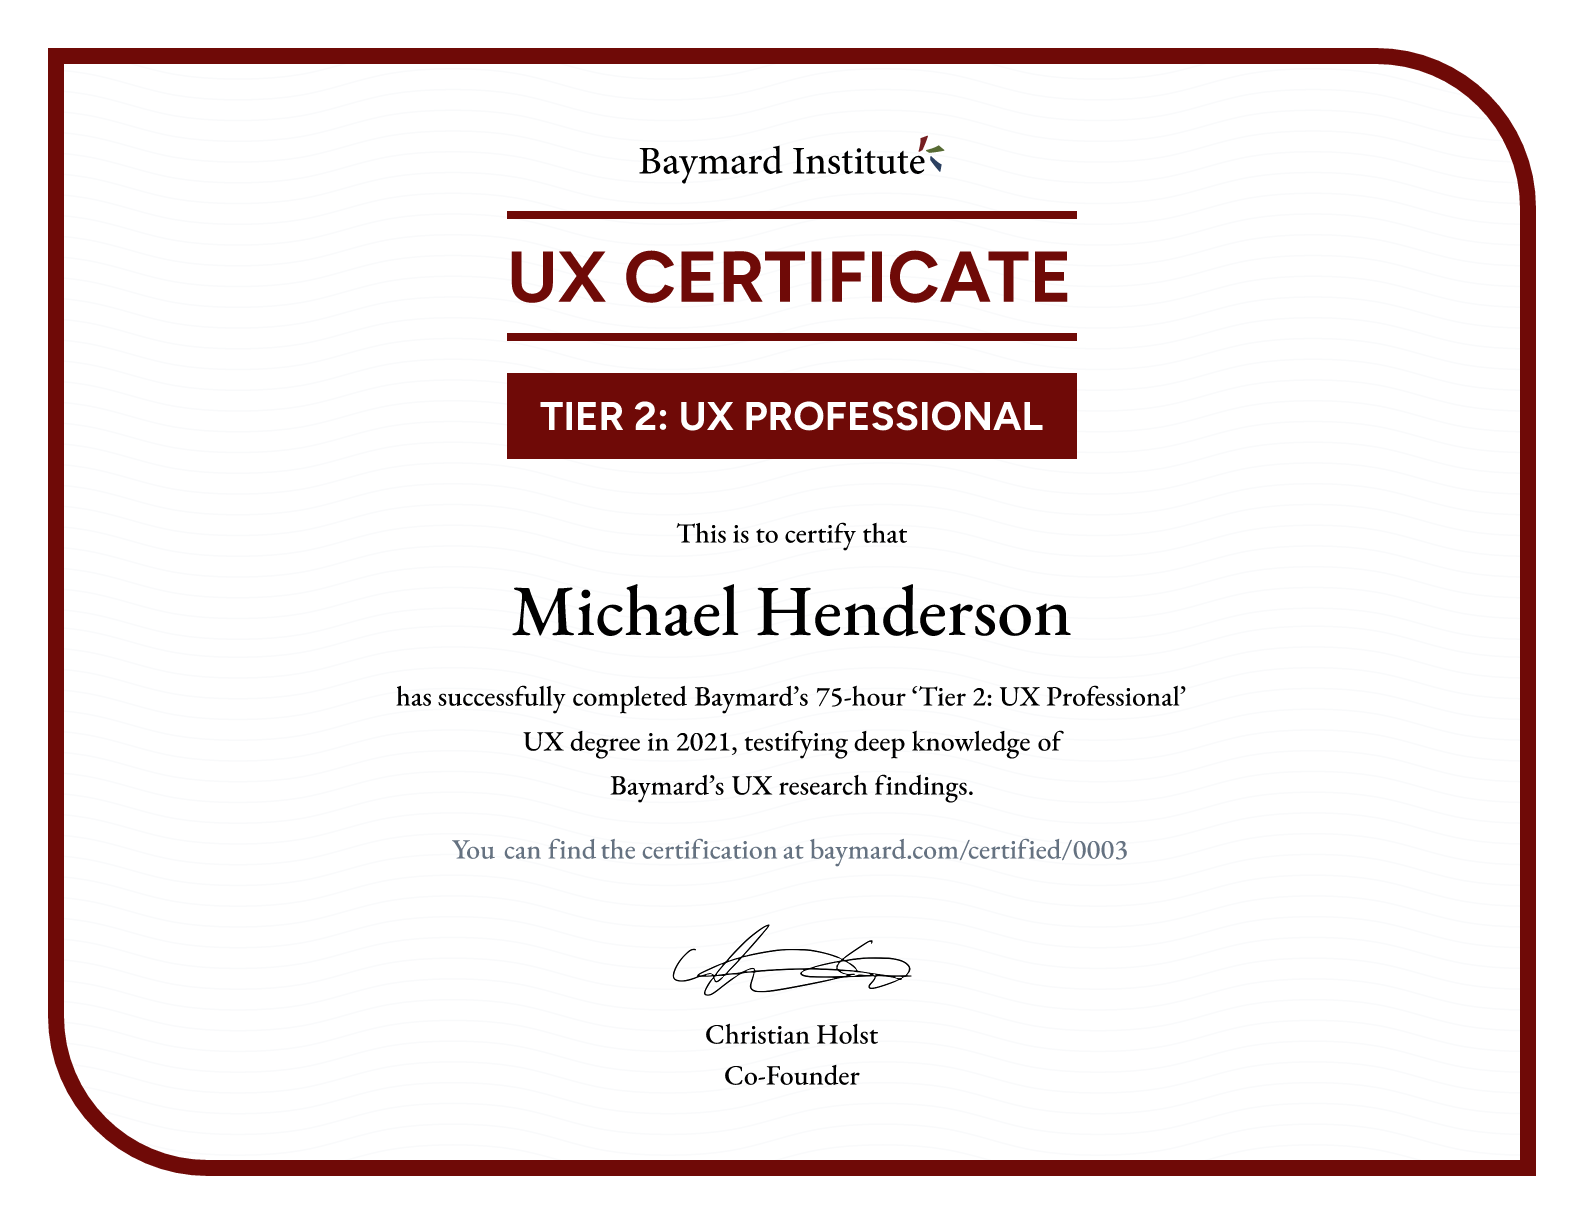 Michael Henderson’s certificate